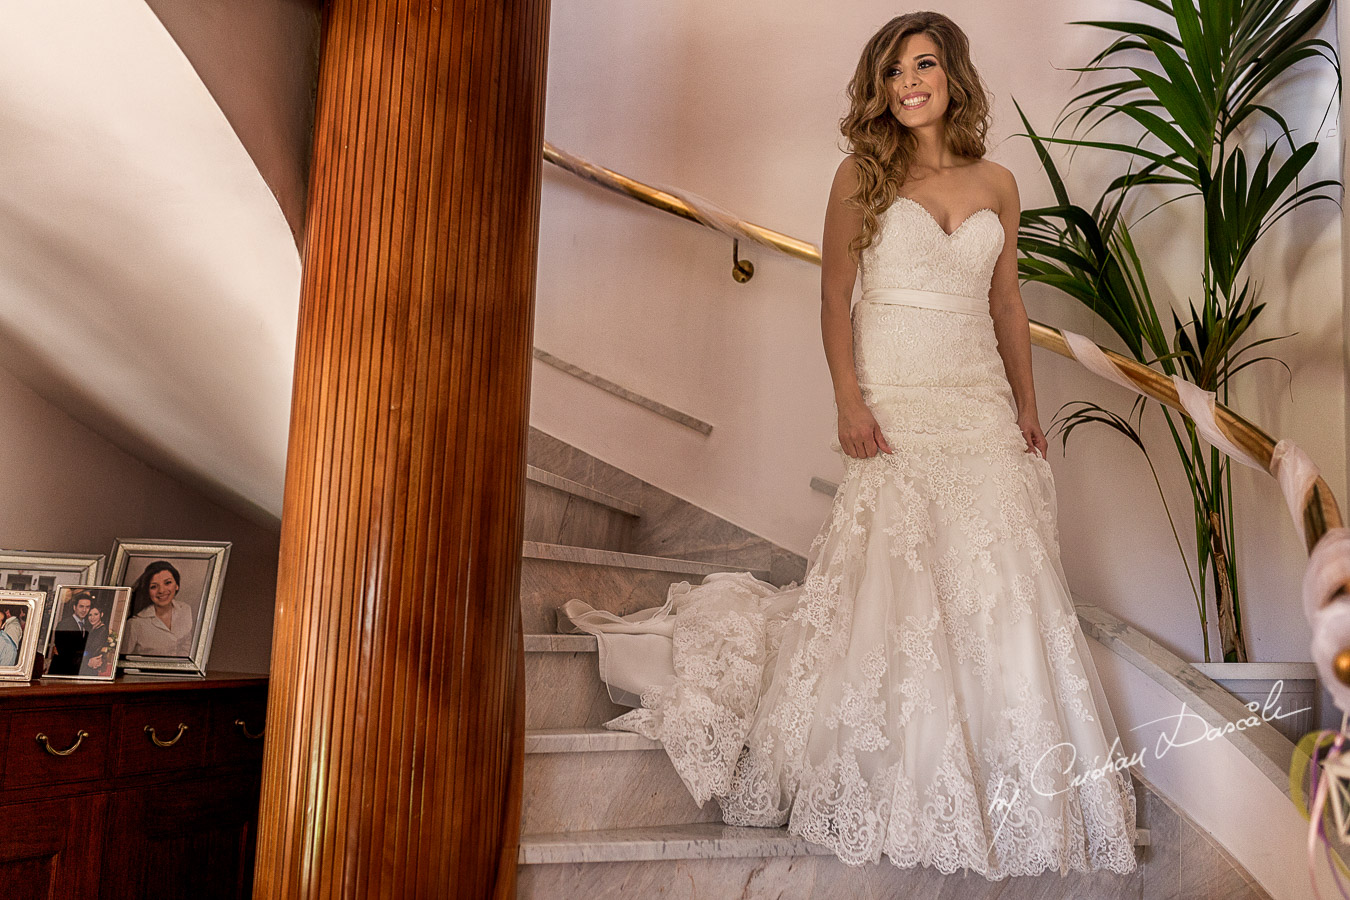 Distinctive Wedding Photography in Cyprus - 16